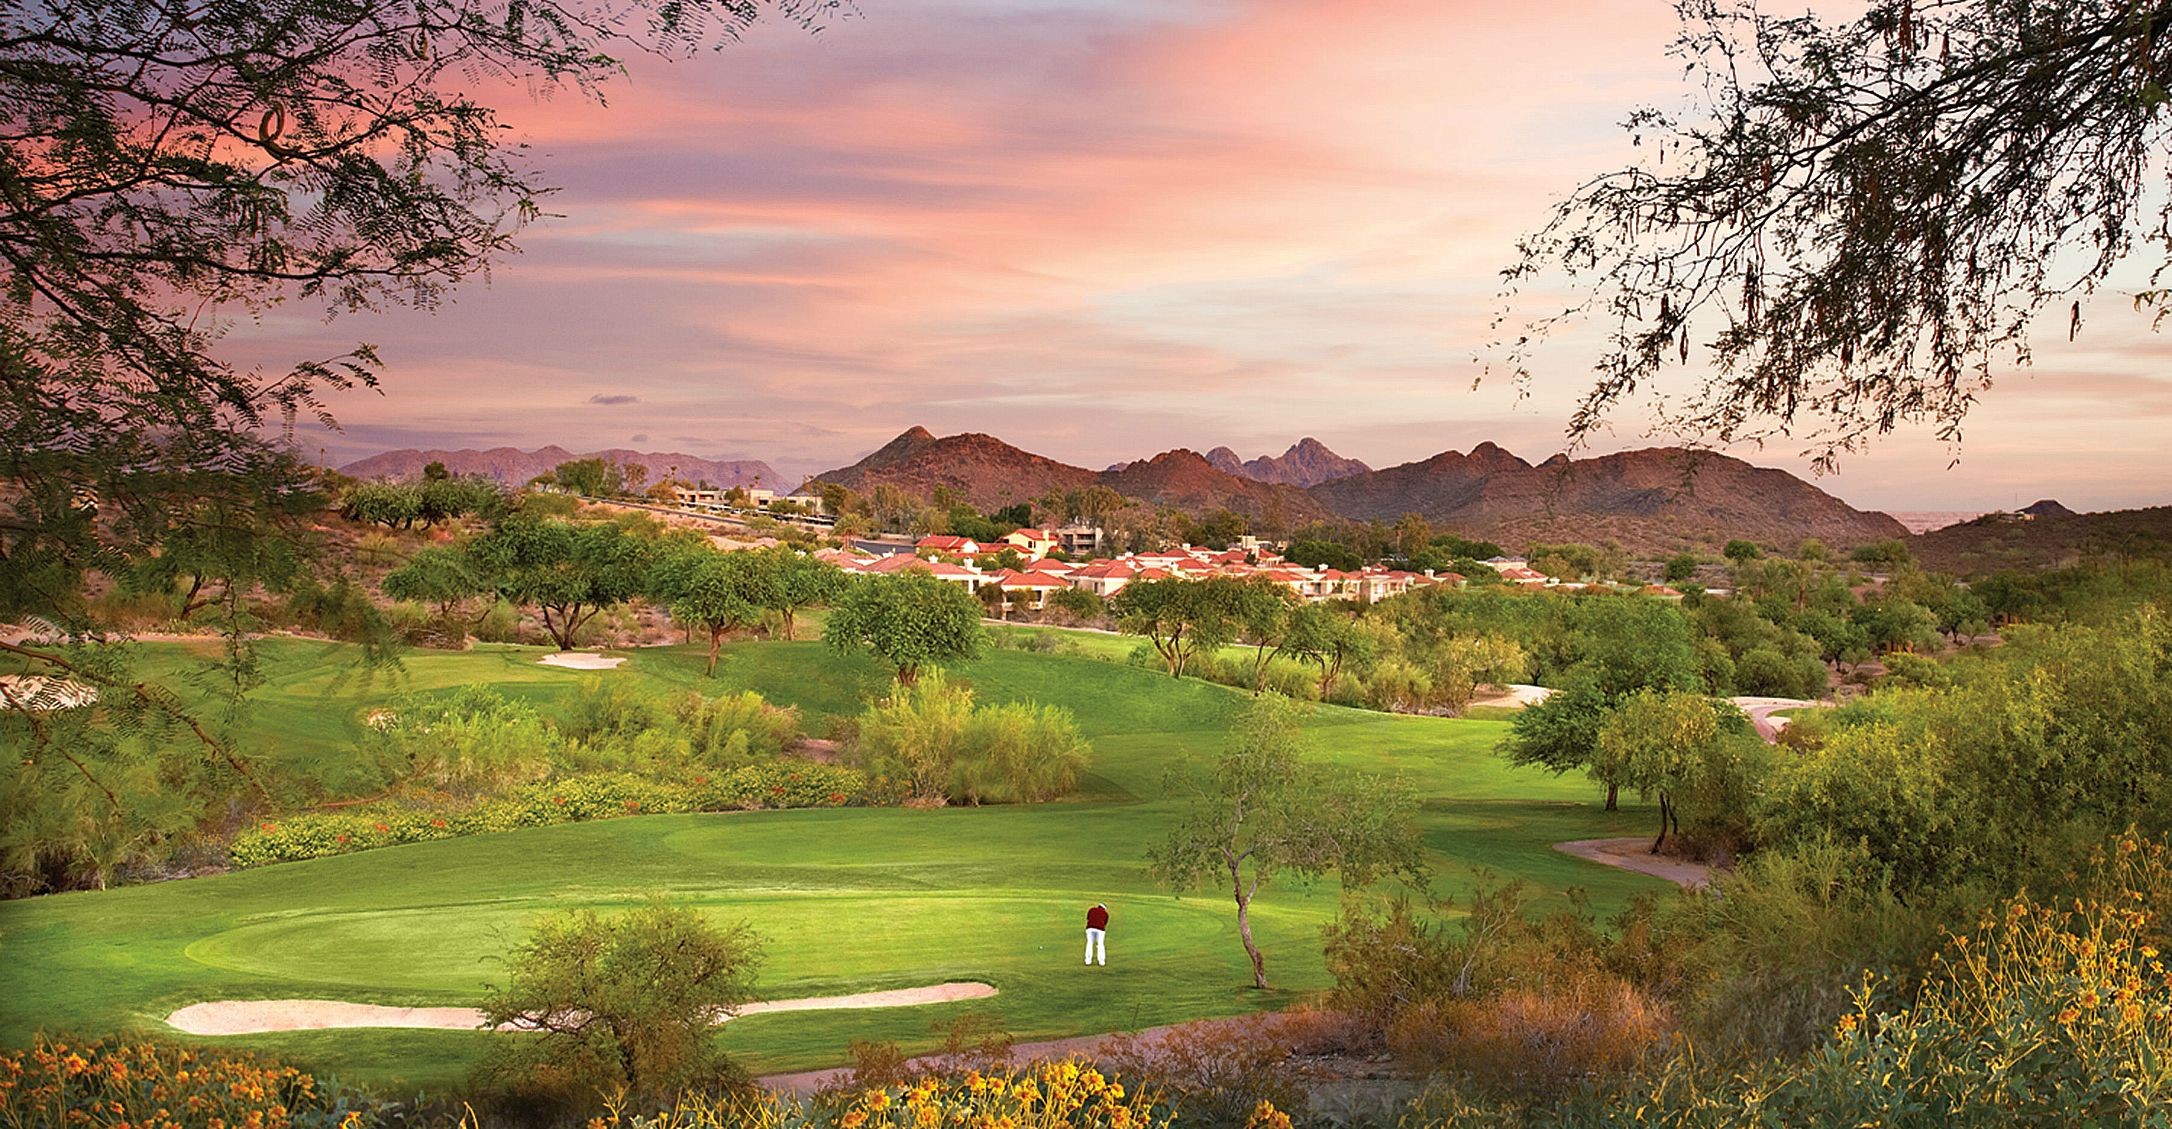 Arizona, USA, Lookout Mountain Golf Club